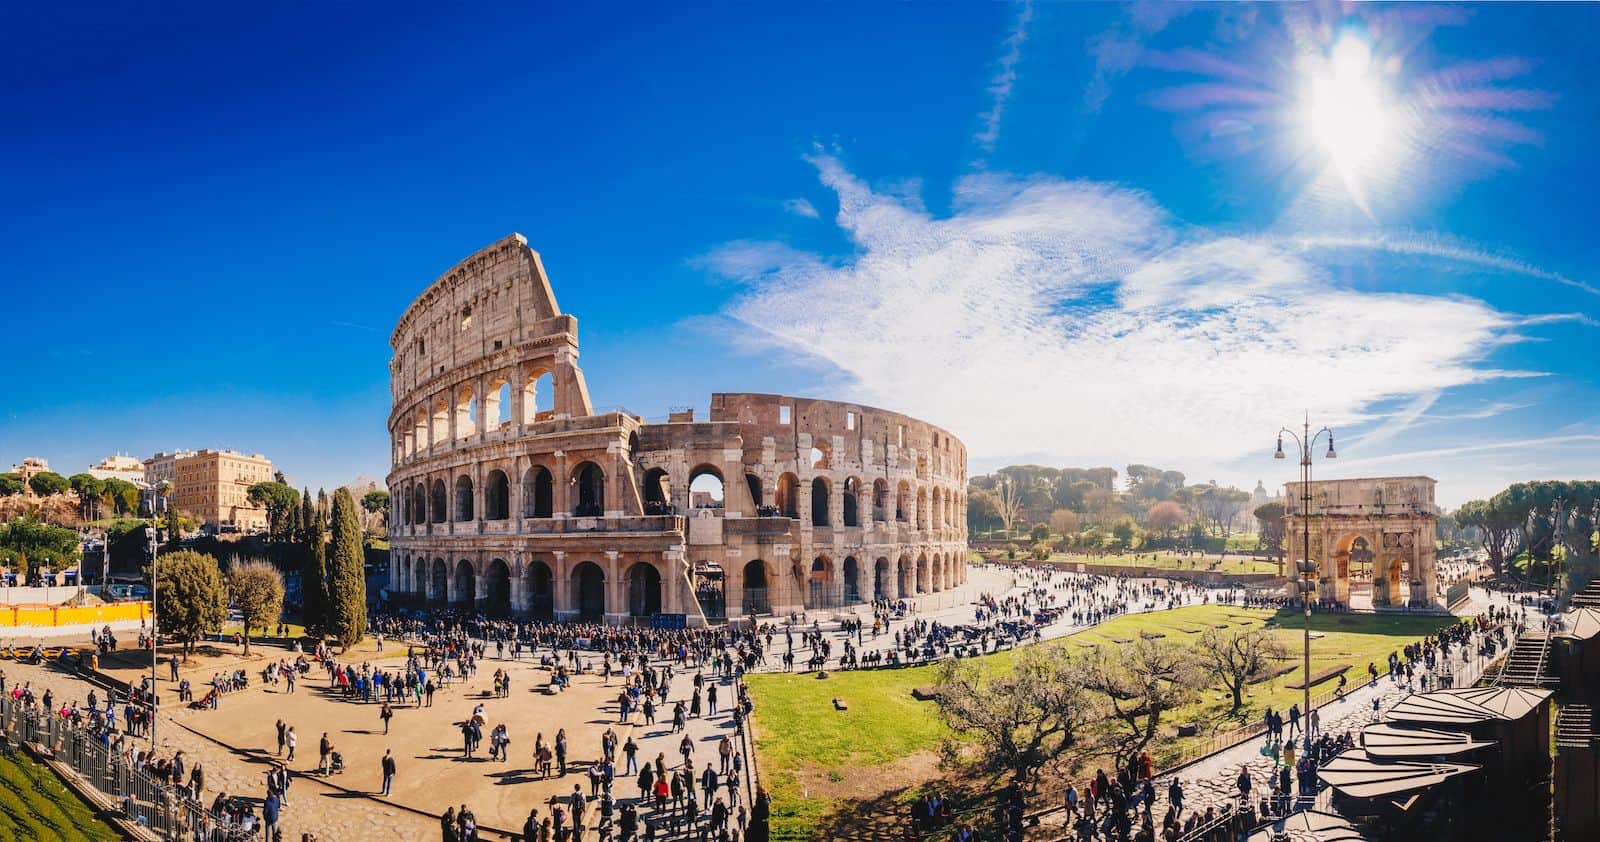  Colosseum or Coliseum, also known as the Flavian Amphitheatre